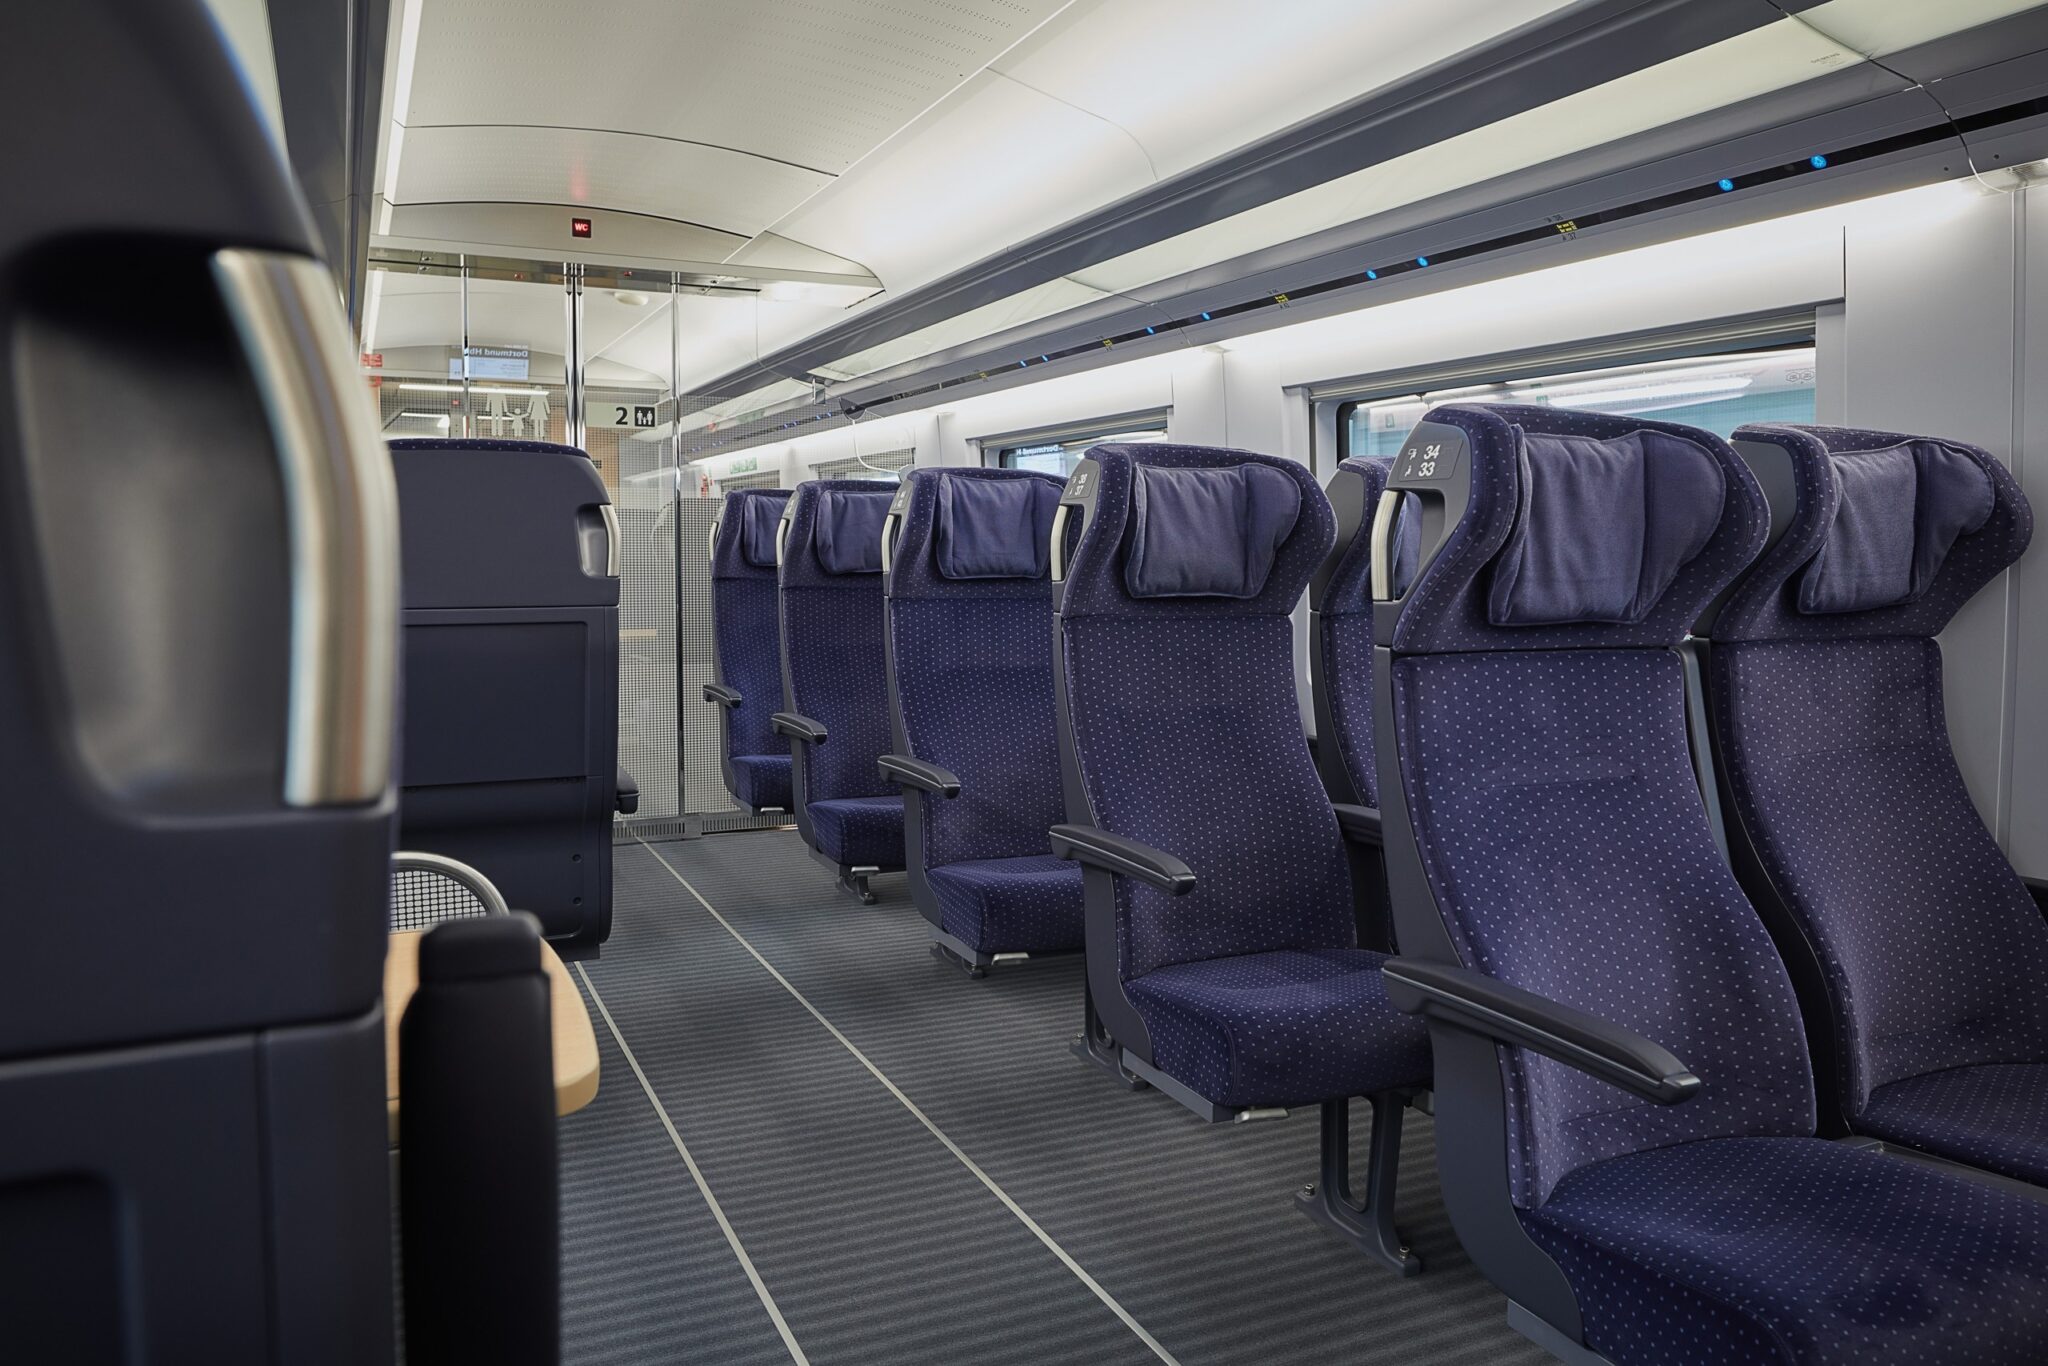 Interior of the Velaro MS (ICE 3neo) high-speed train